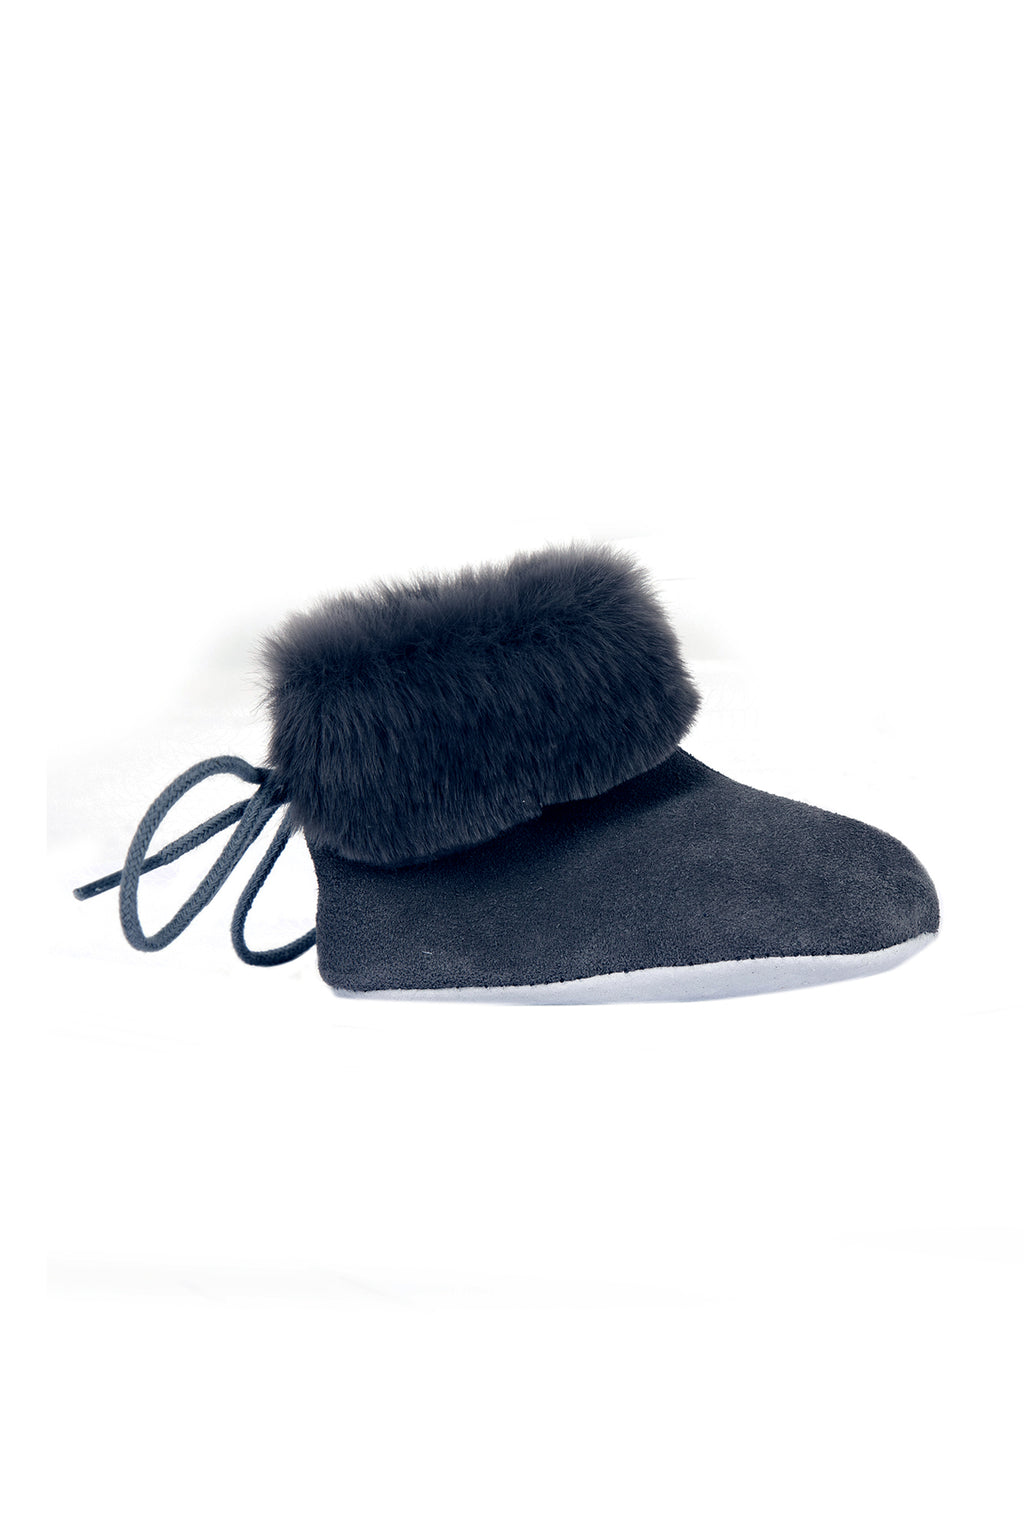 Slippers - Navy fur